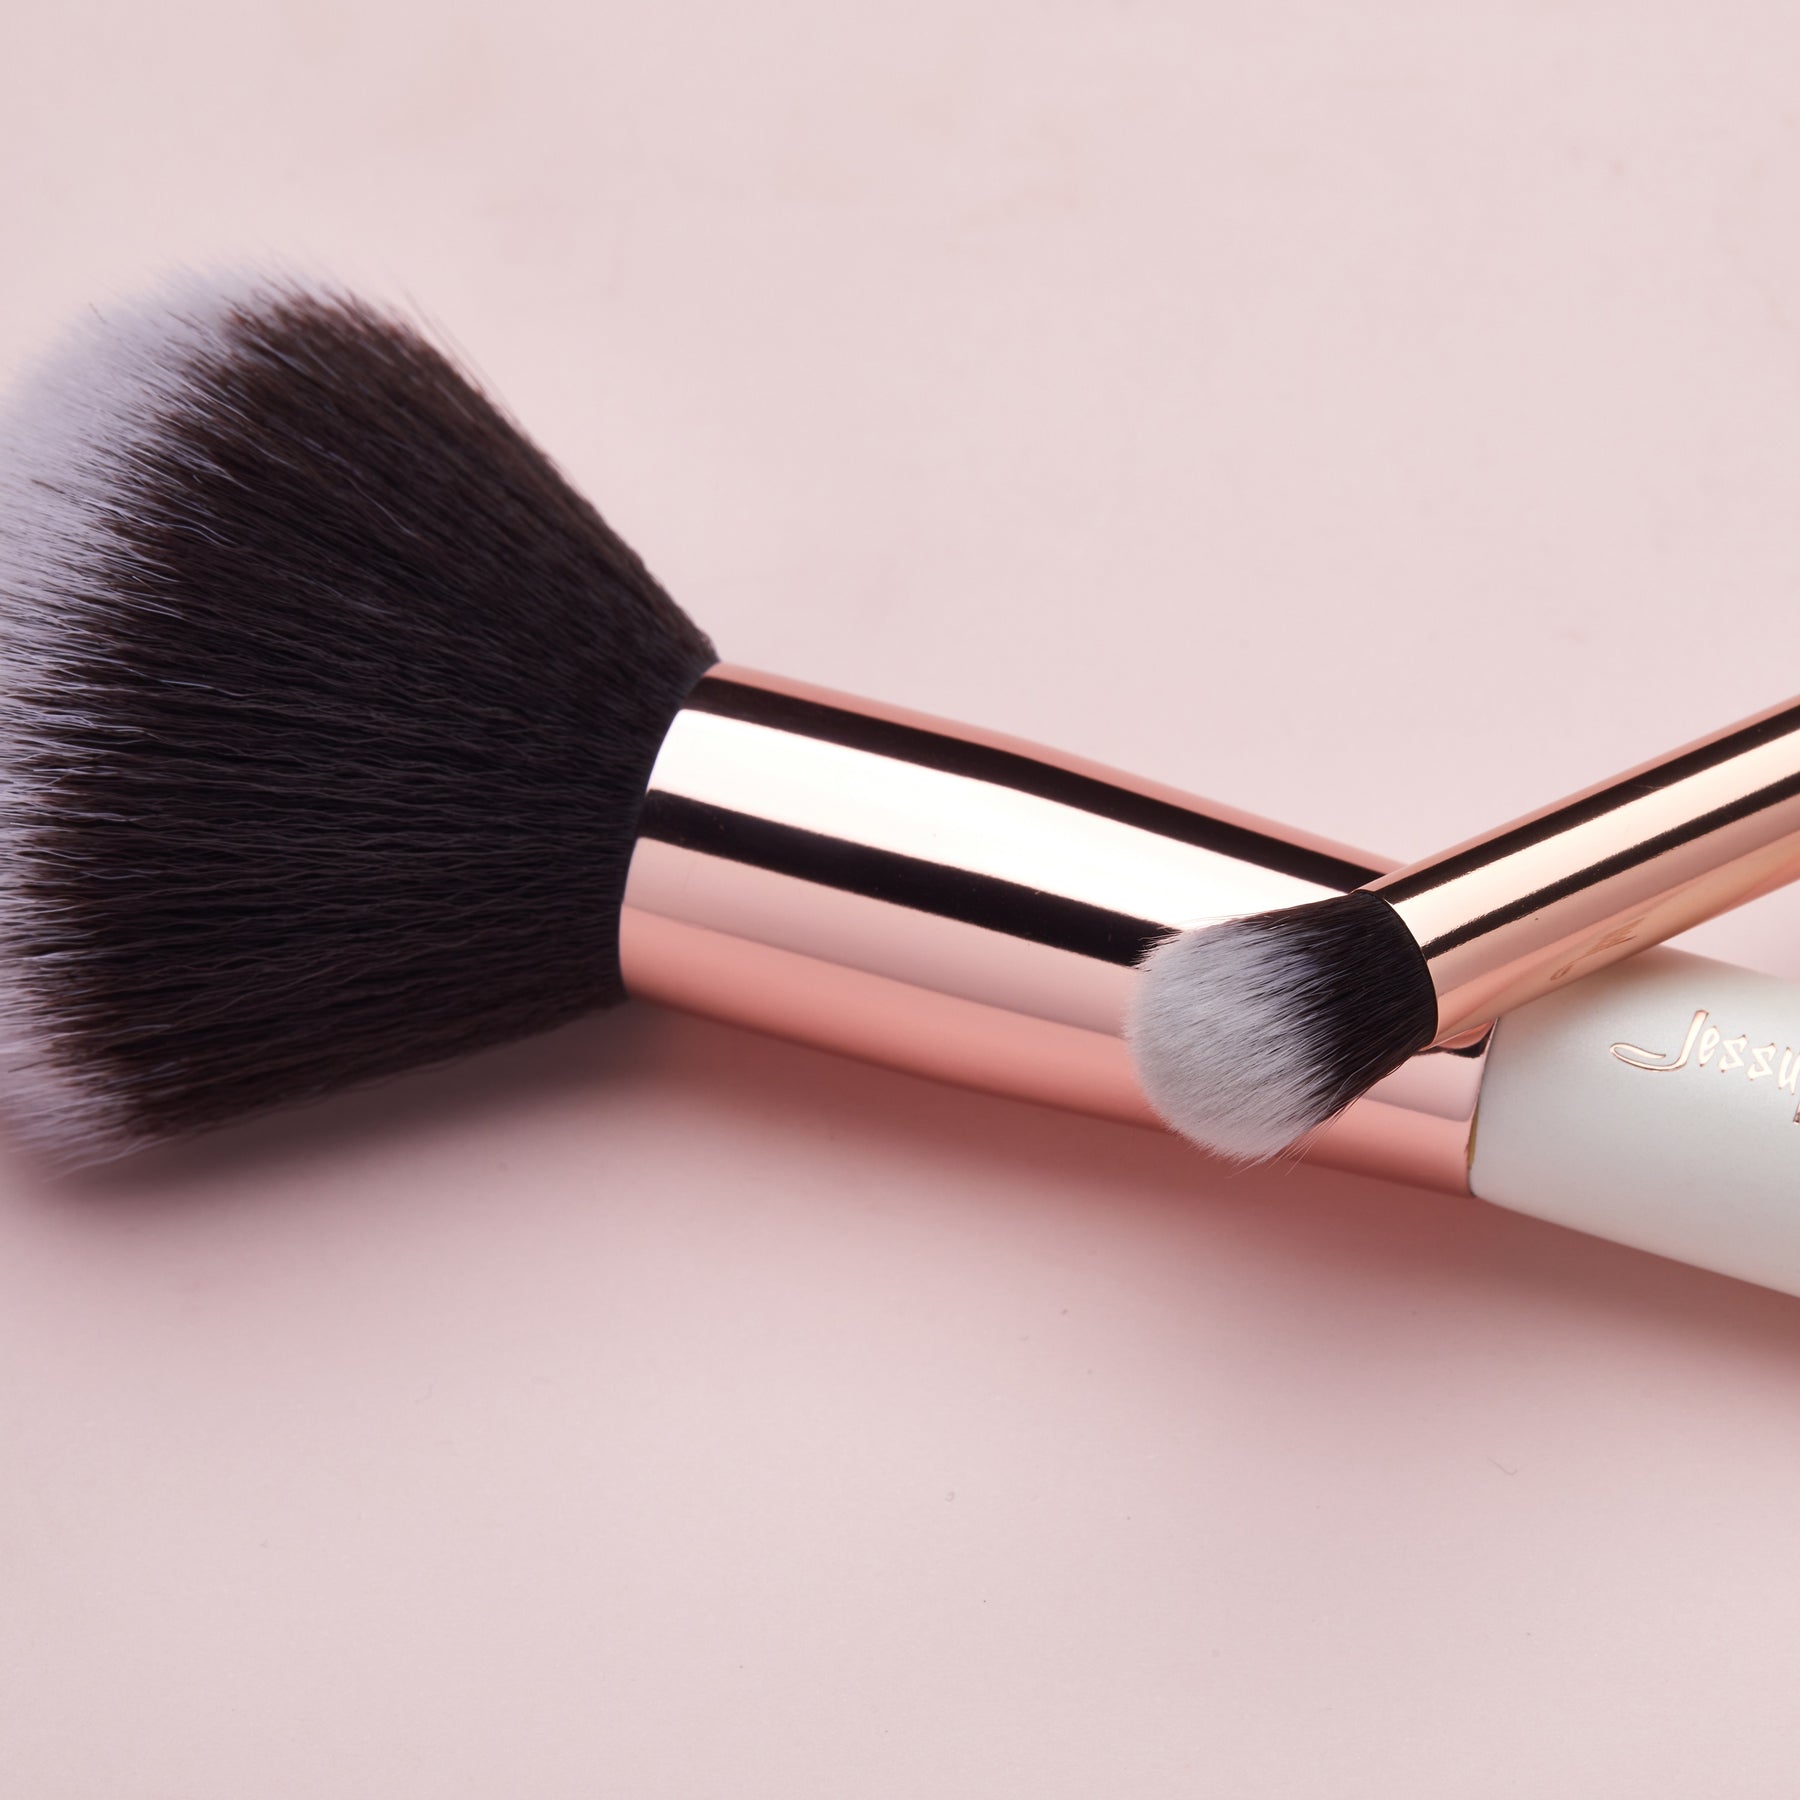 JESSUP Jessup Brand 15pcs Pearl White/Rose Gold Makeup Brushes Make up Tool  Kit Beauty Professional Eyeshadow Power Lipstick Blending C